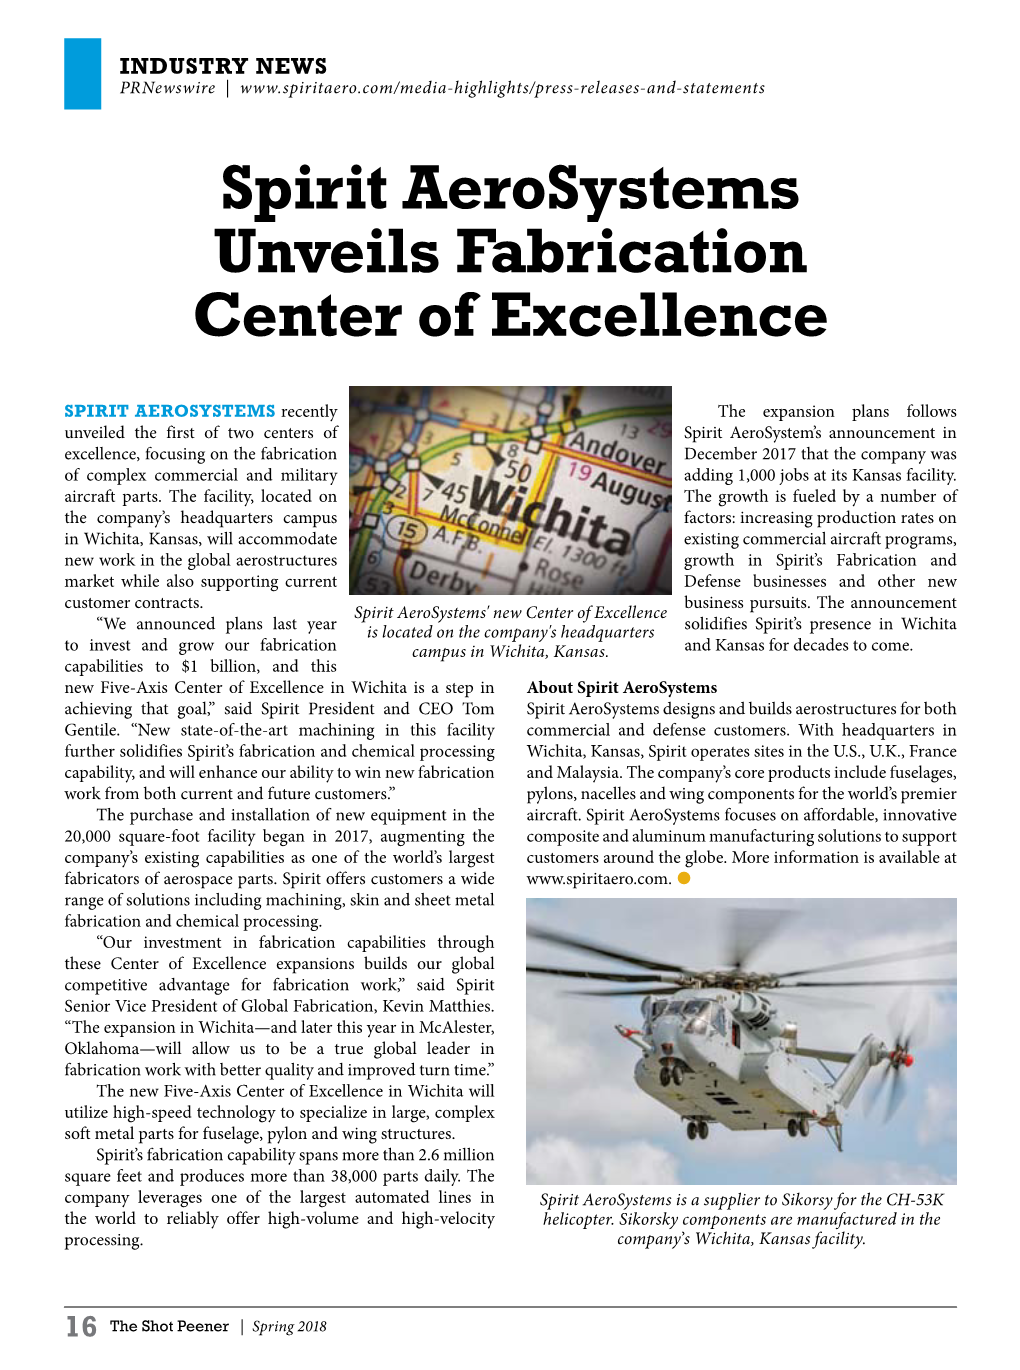 Spirit Aerosystems Unveils Fabrication Center of Excellence